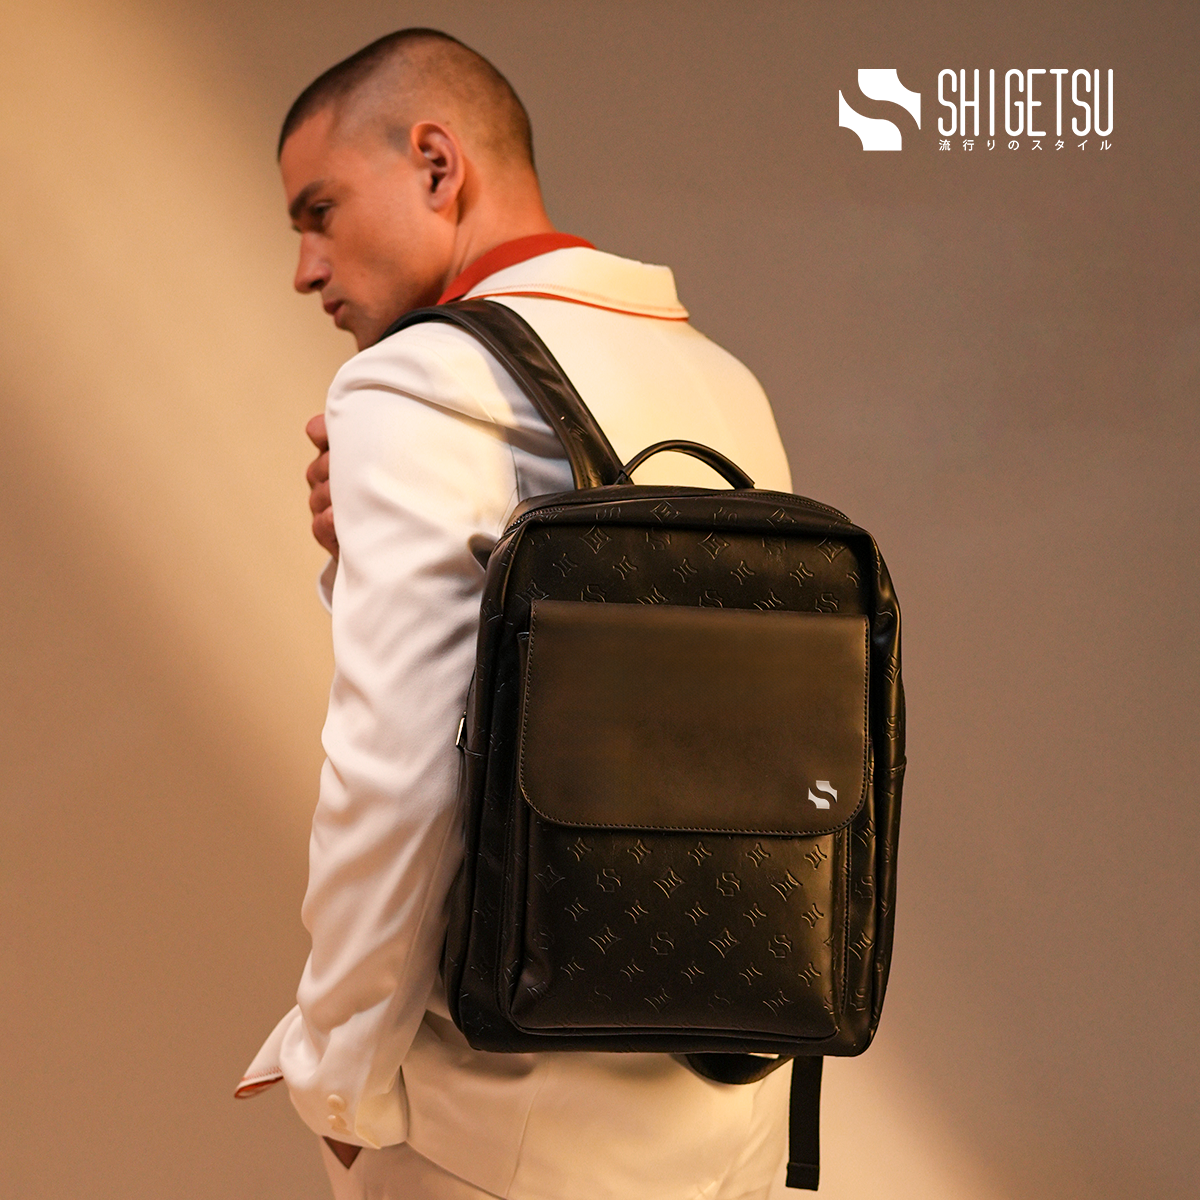 Shigetsu KOKUBU Debossed Bag Leather Backpack for men